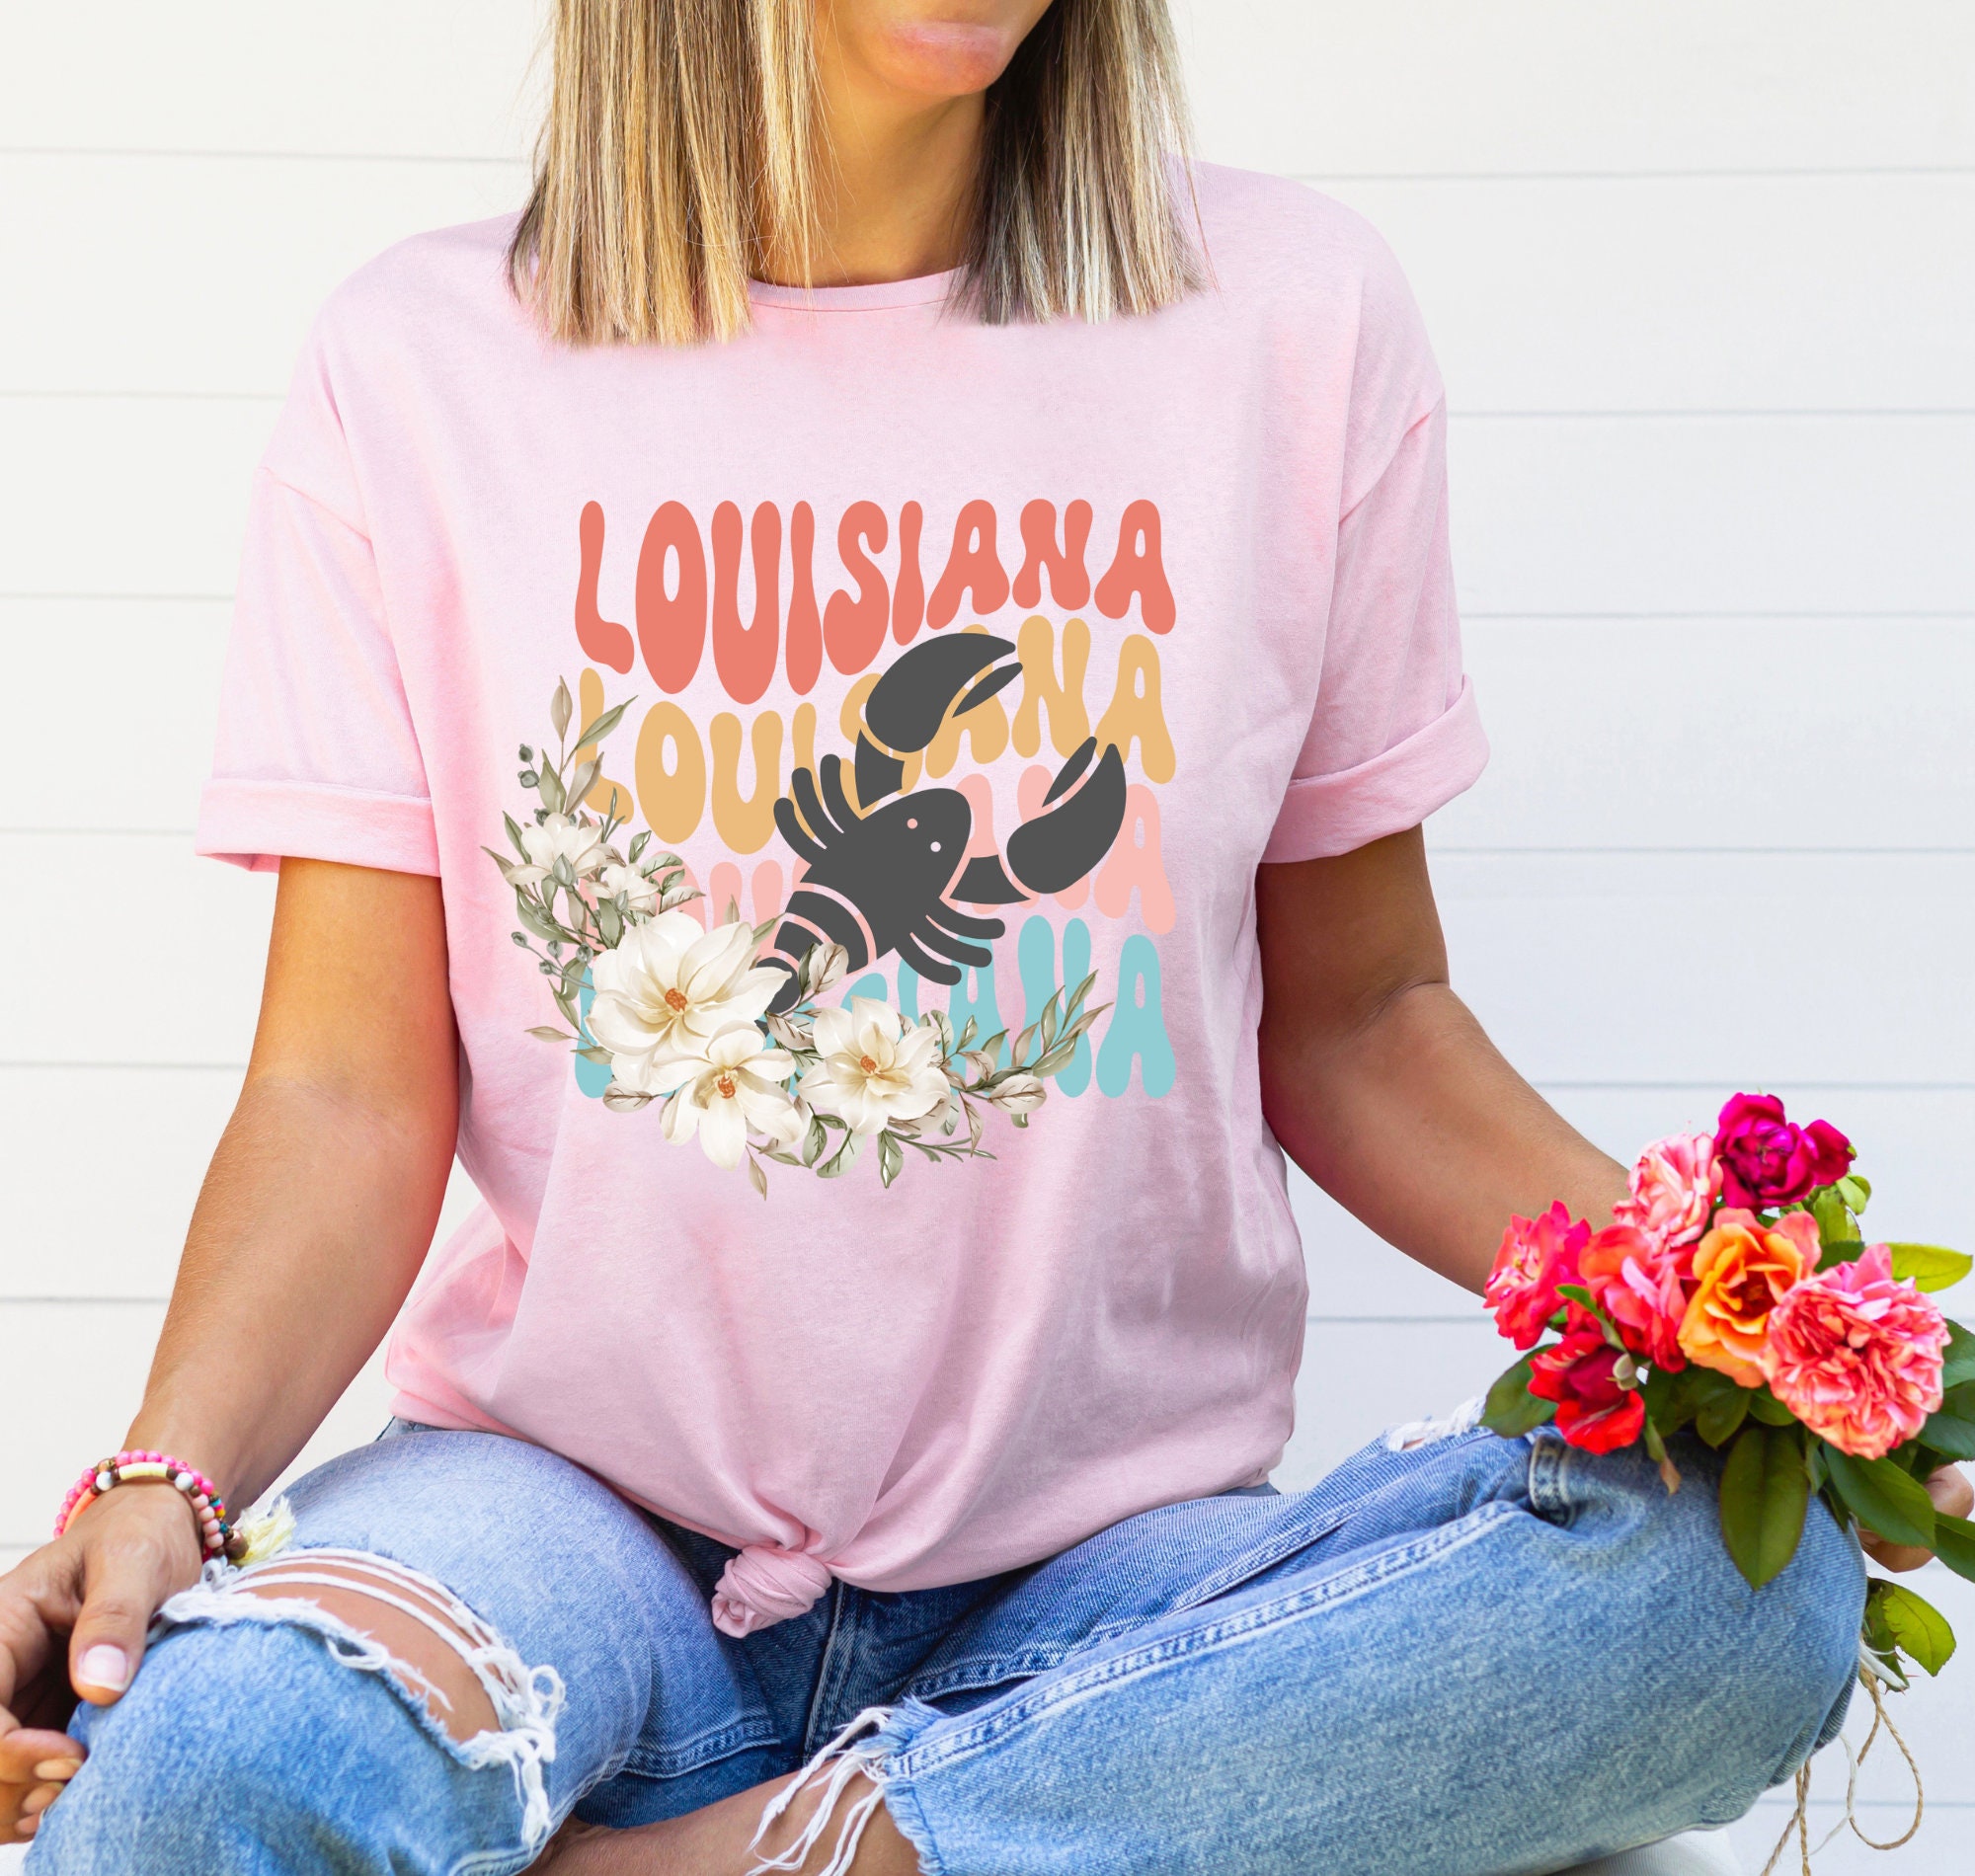  Funny Louisiana Shirts Just a Louisiana girl in an